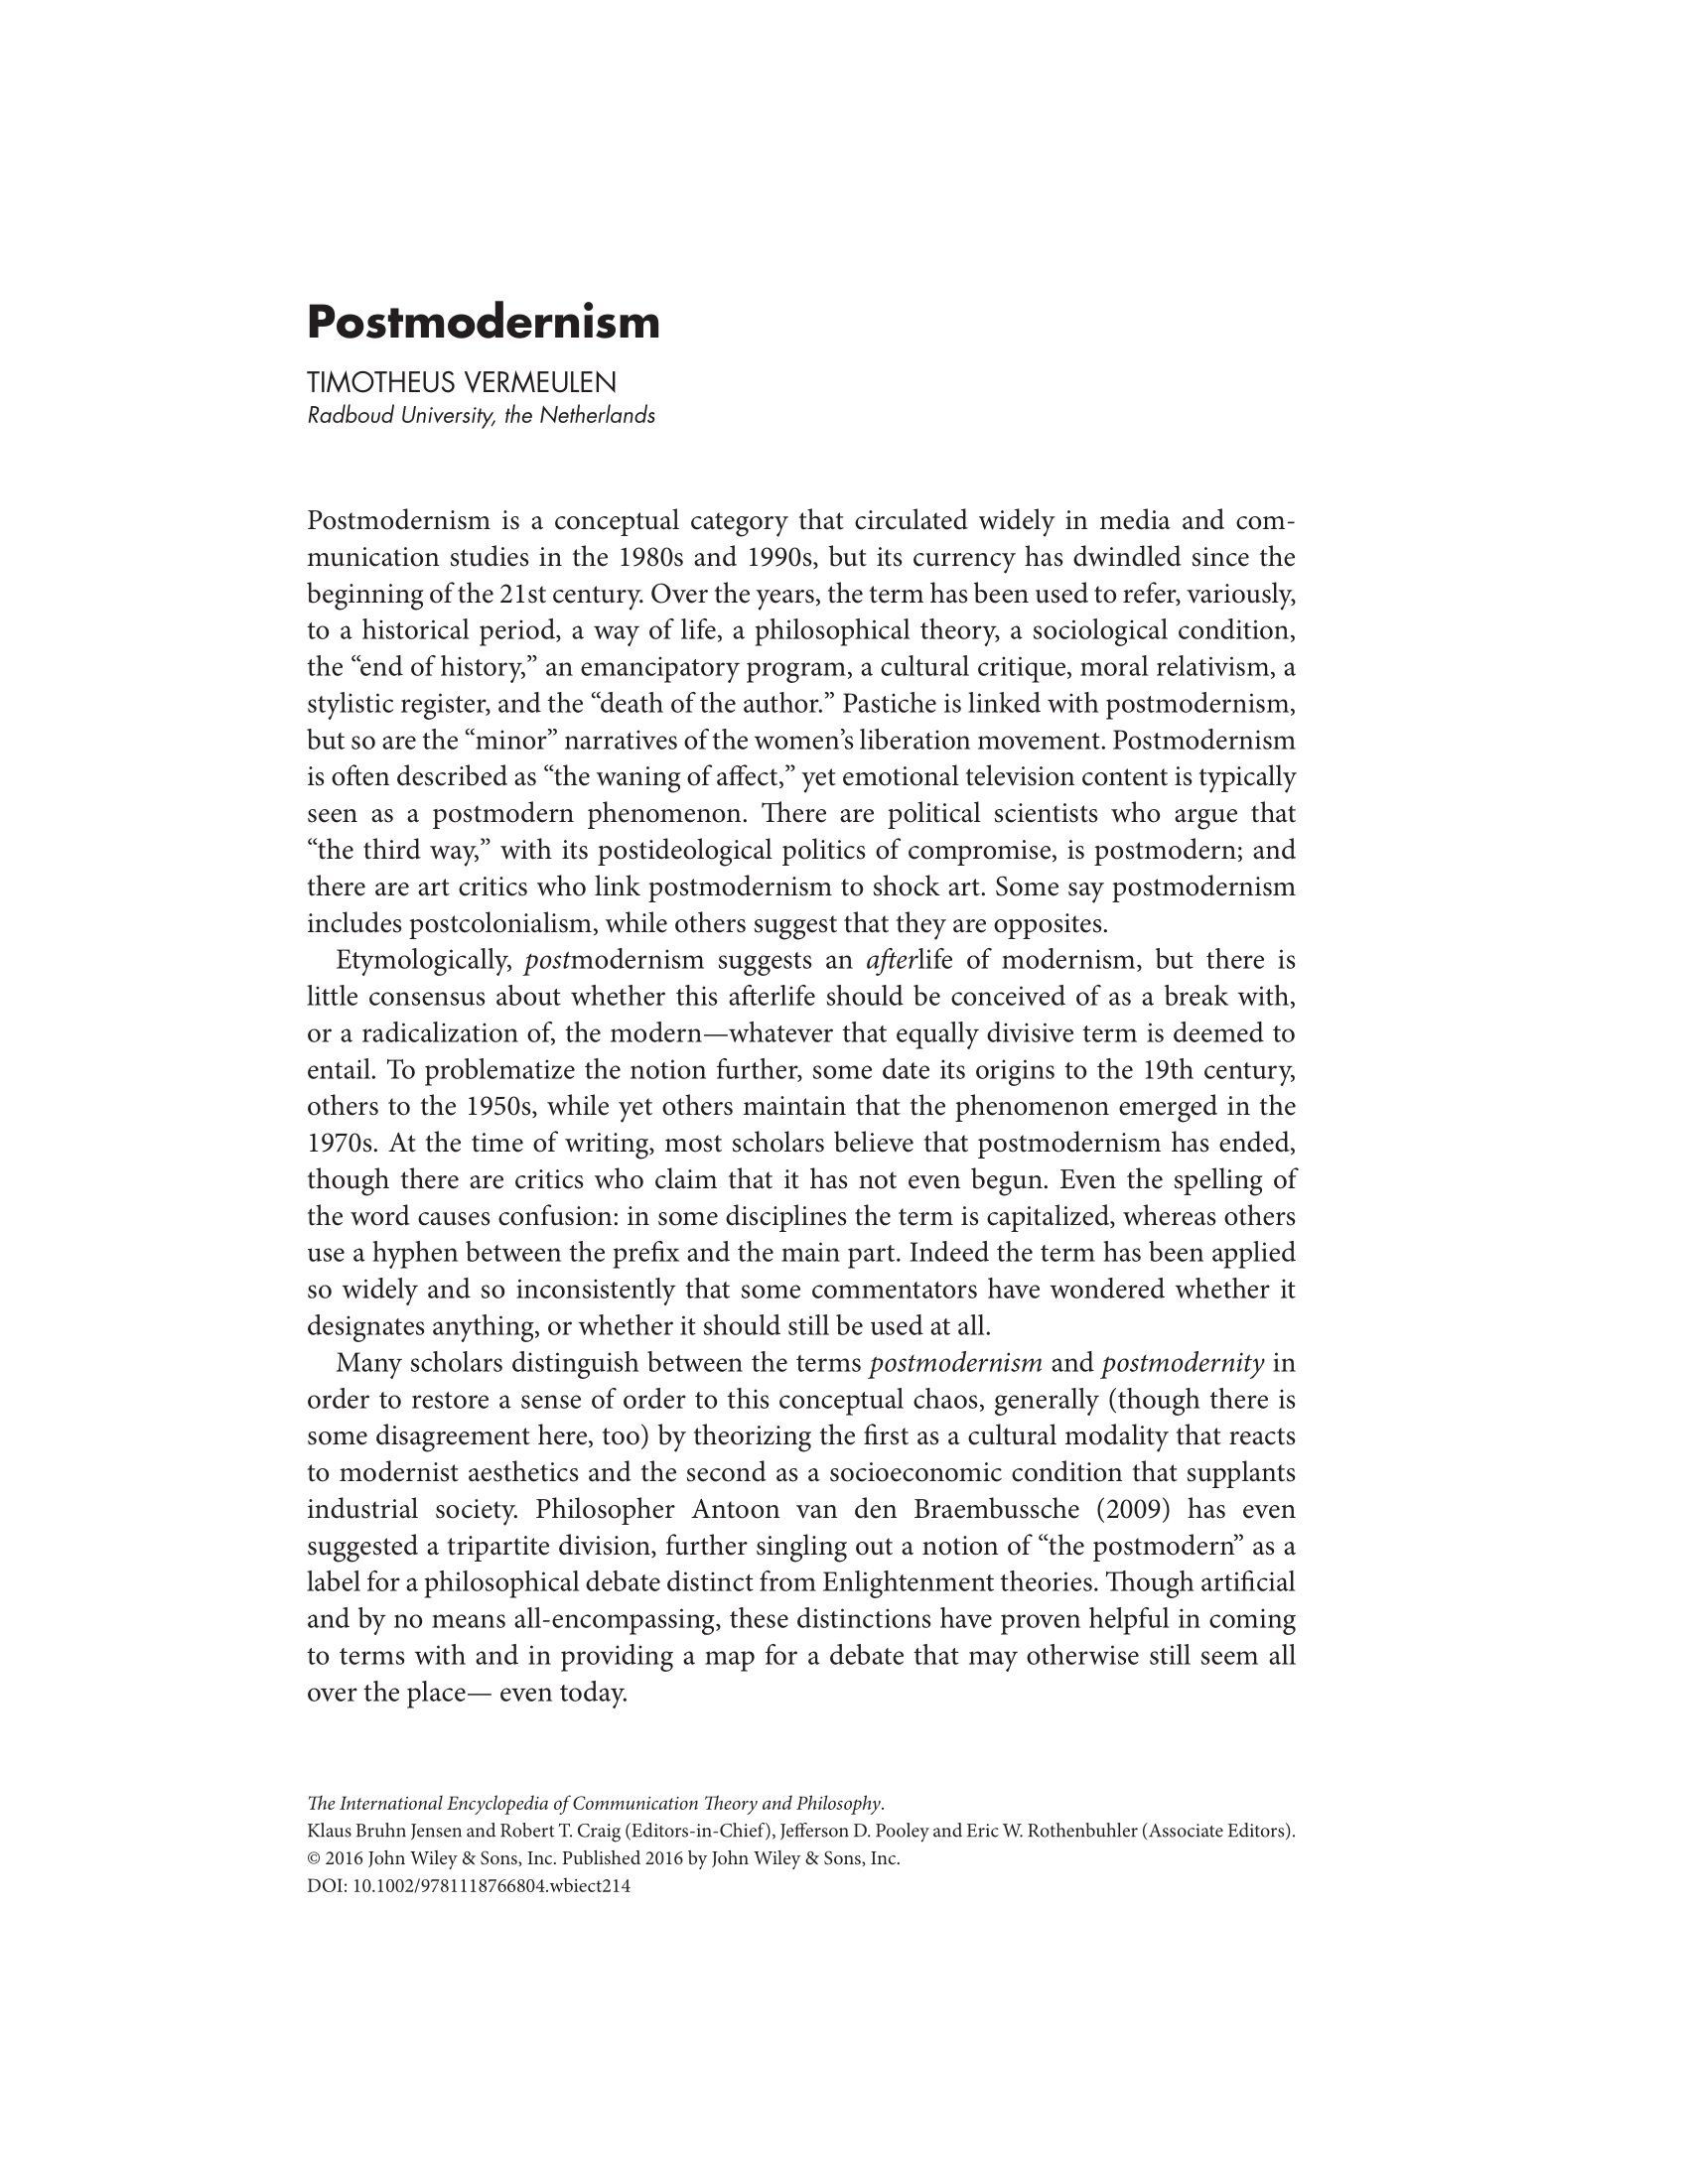 Postmodernism-1.png